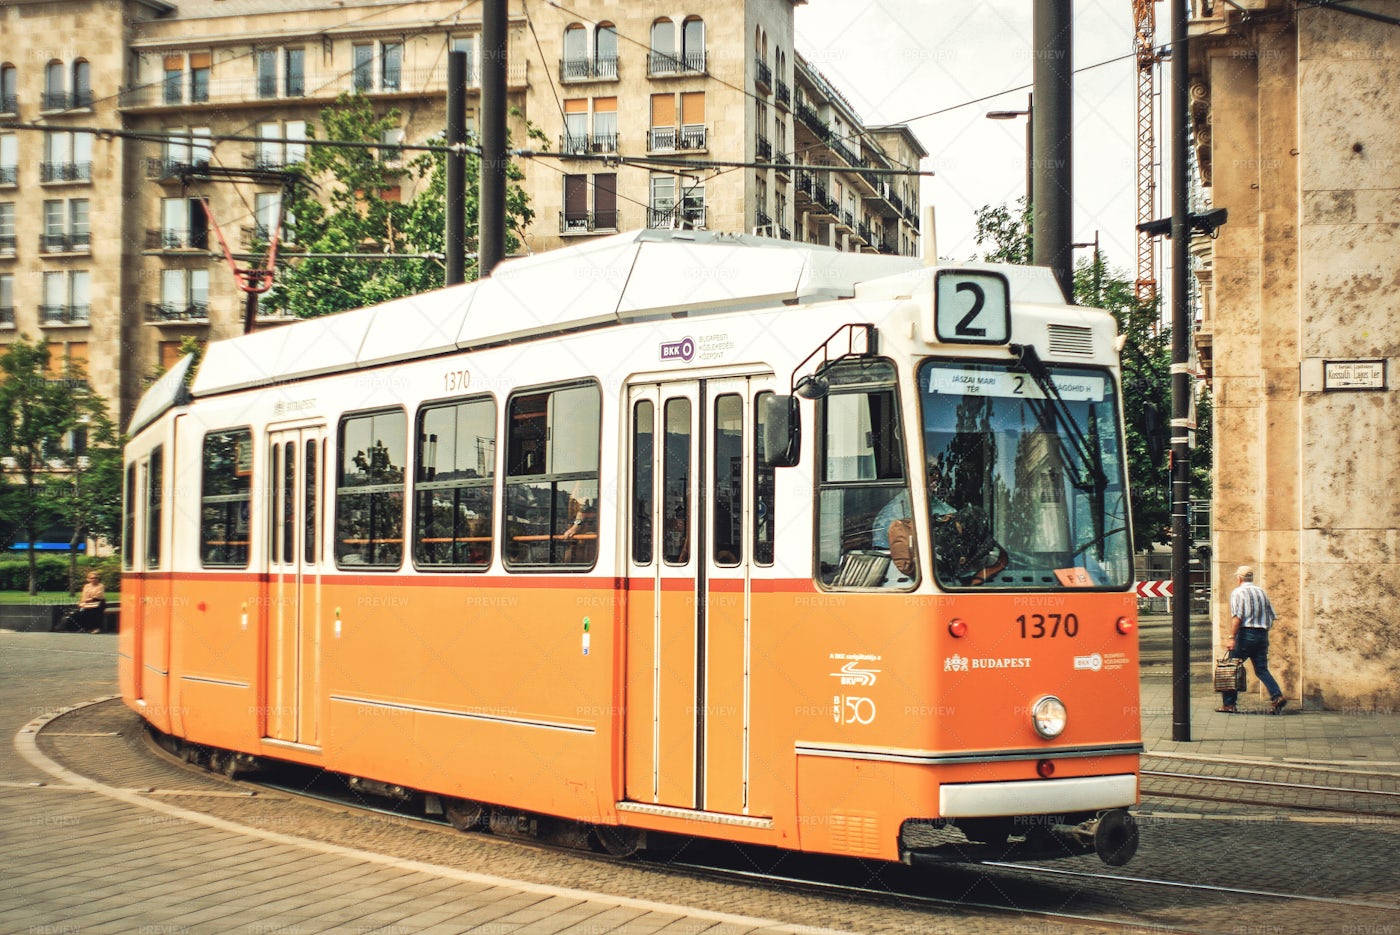 A Tram Rides Past: Stock Photos